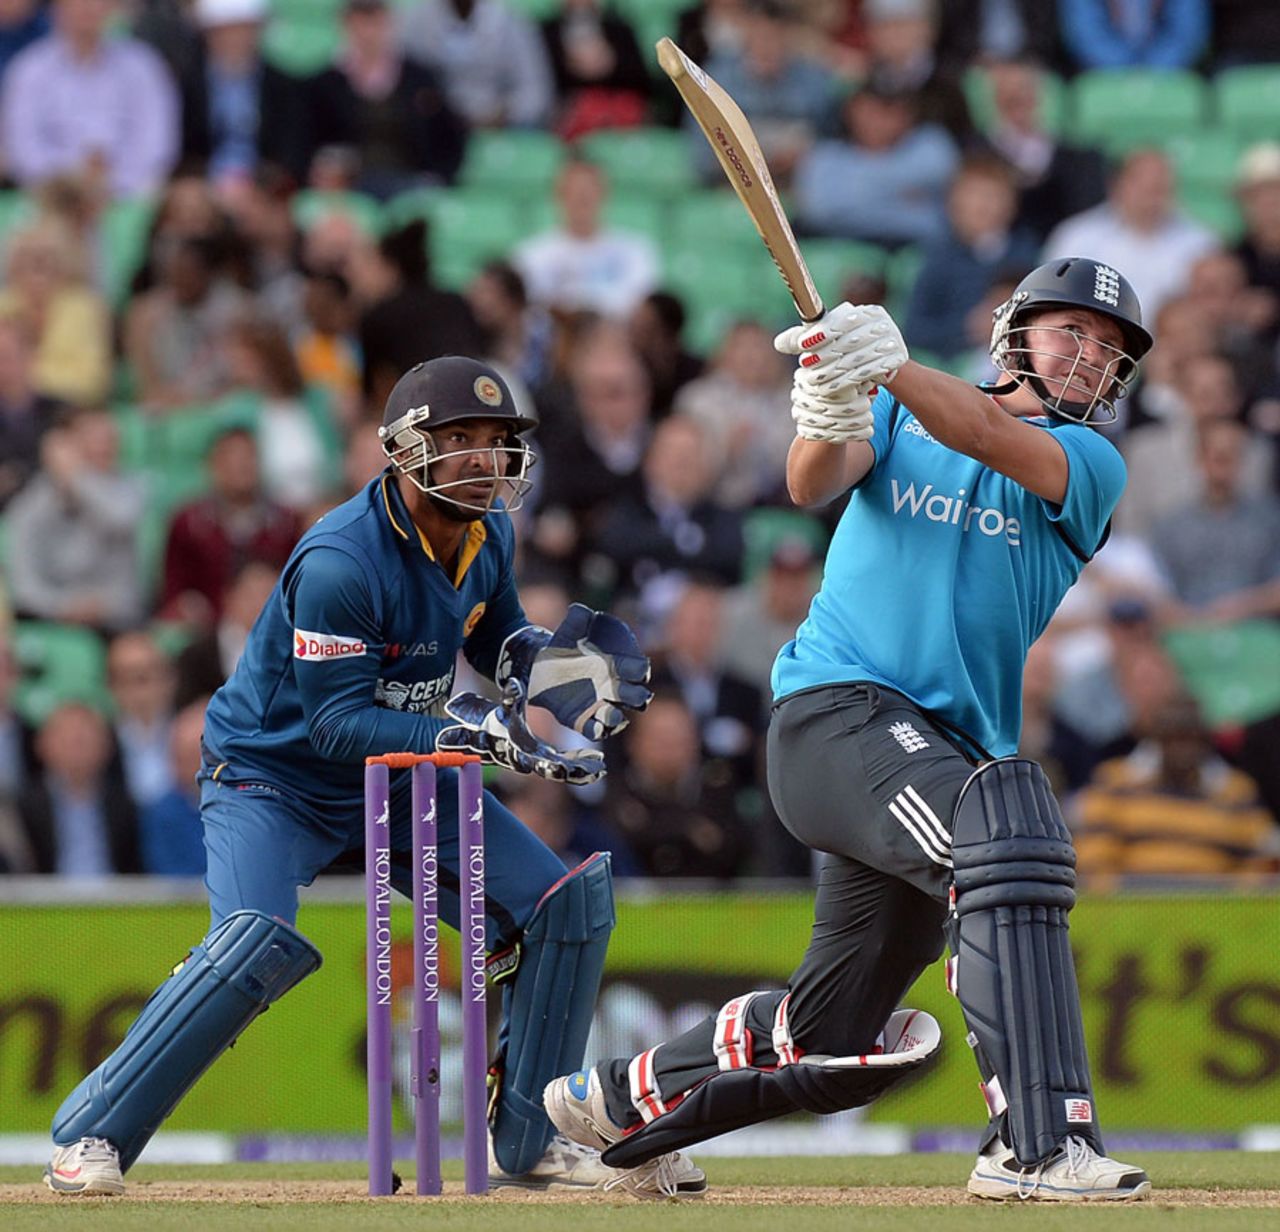 Gary Ballance went to his second ODI half-century, England v Sri Lanka, 1st ODI, The Oval, May 22, 2014